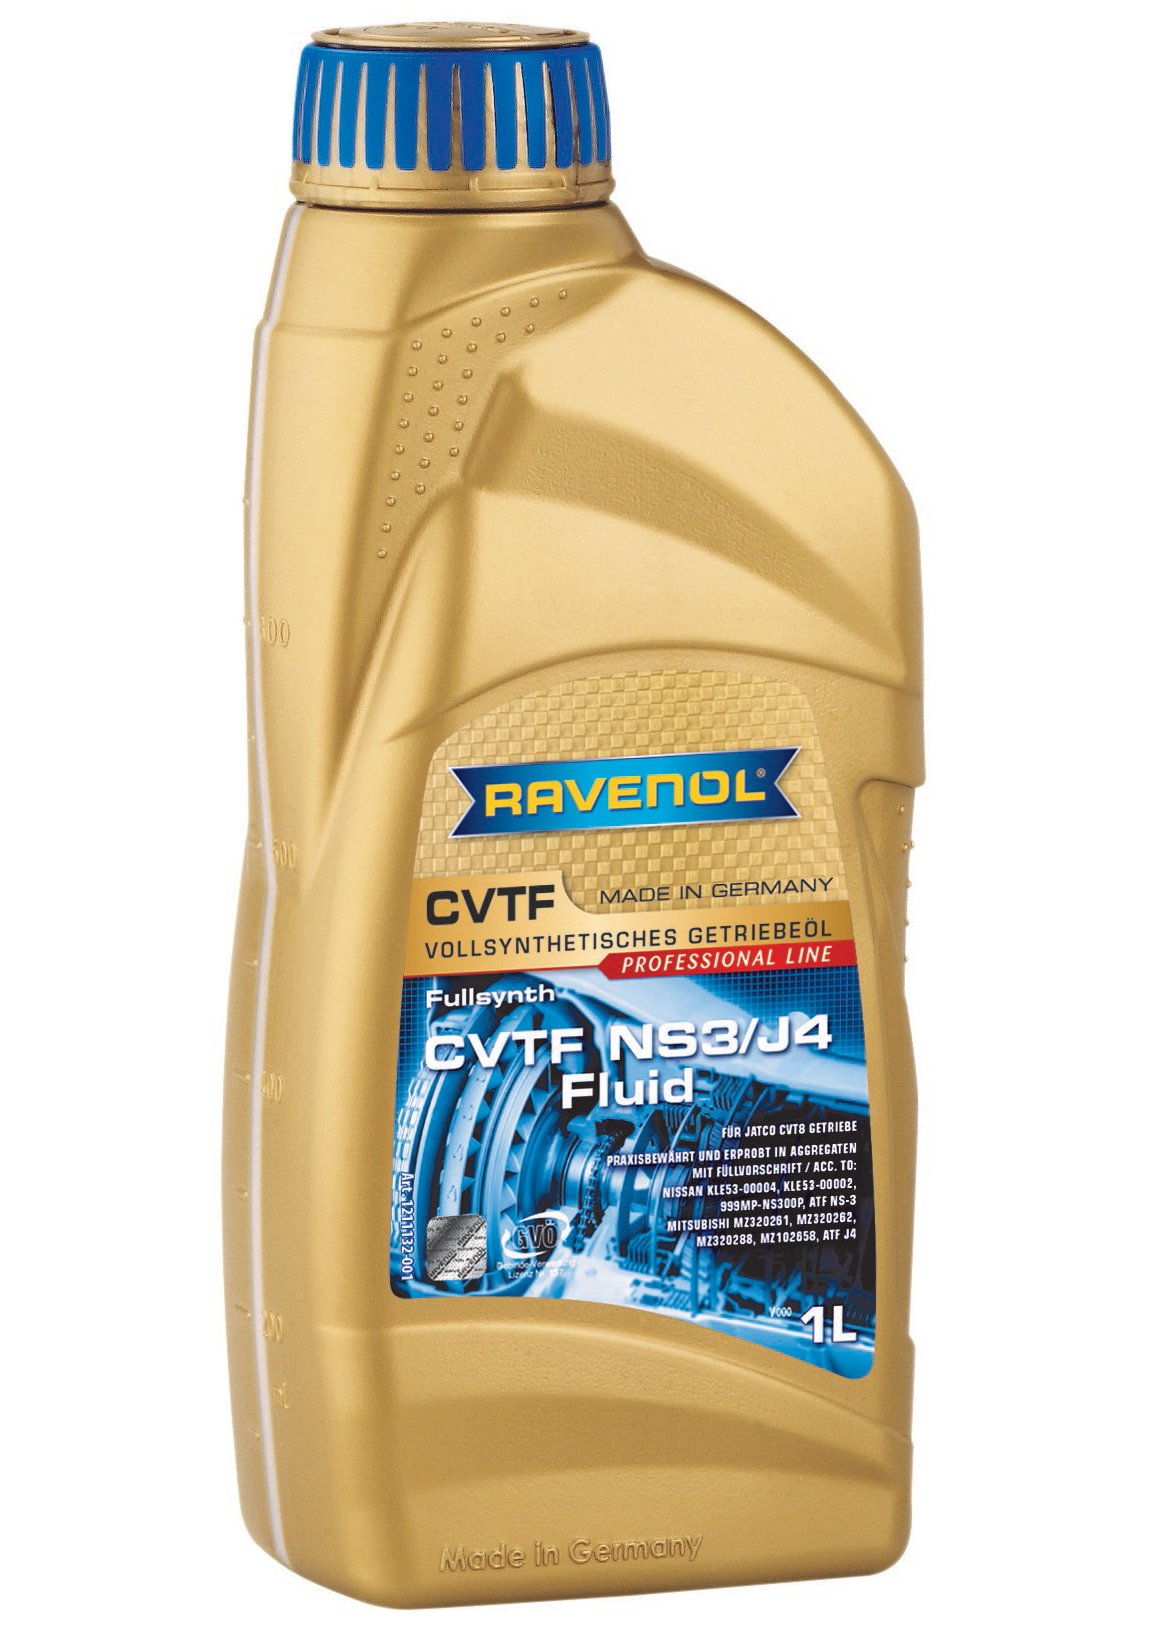 RAVENOL CVTF NS3/J4 Fluid von RAVENOL